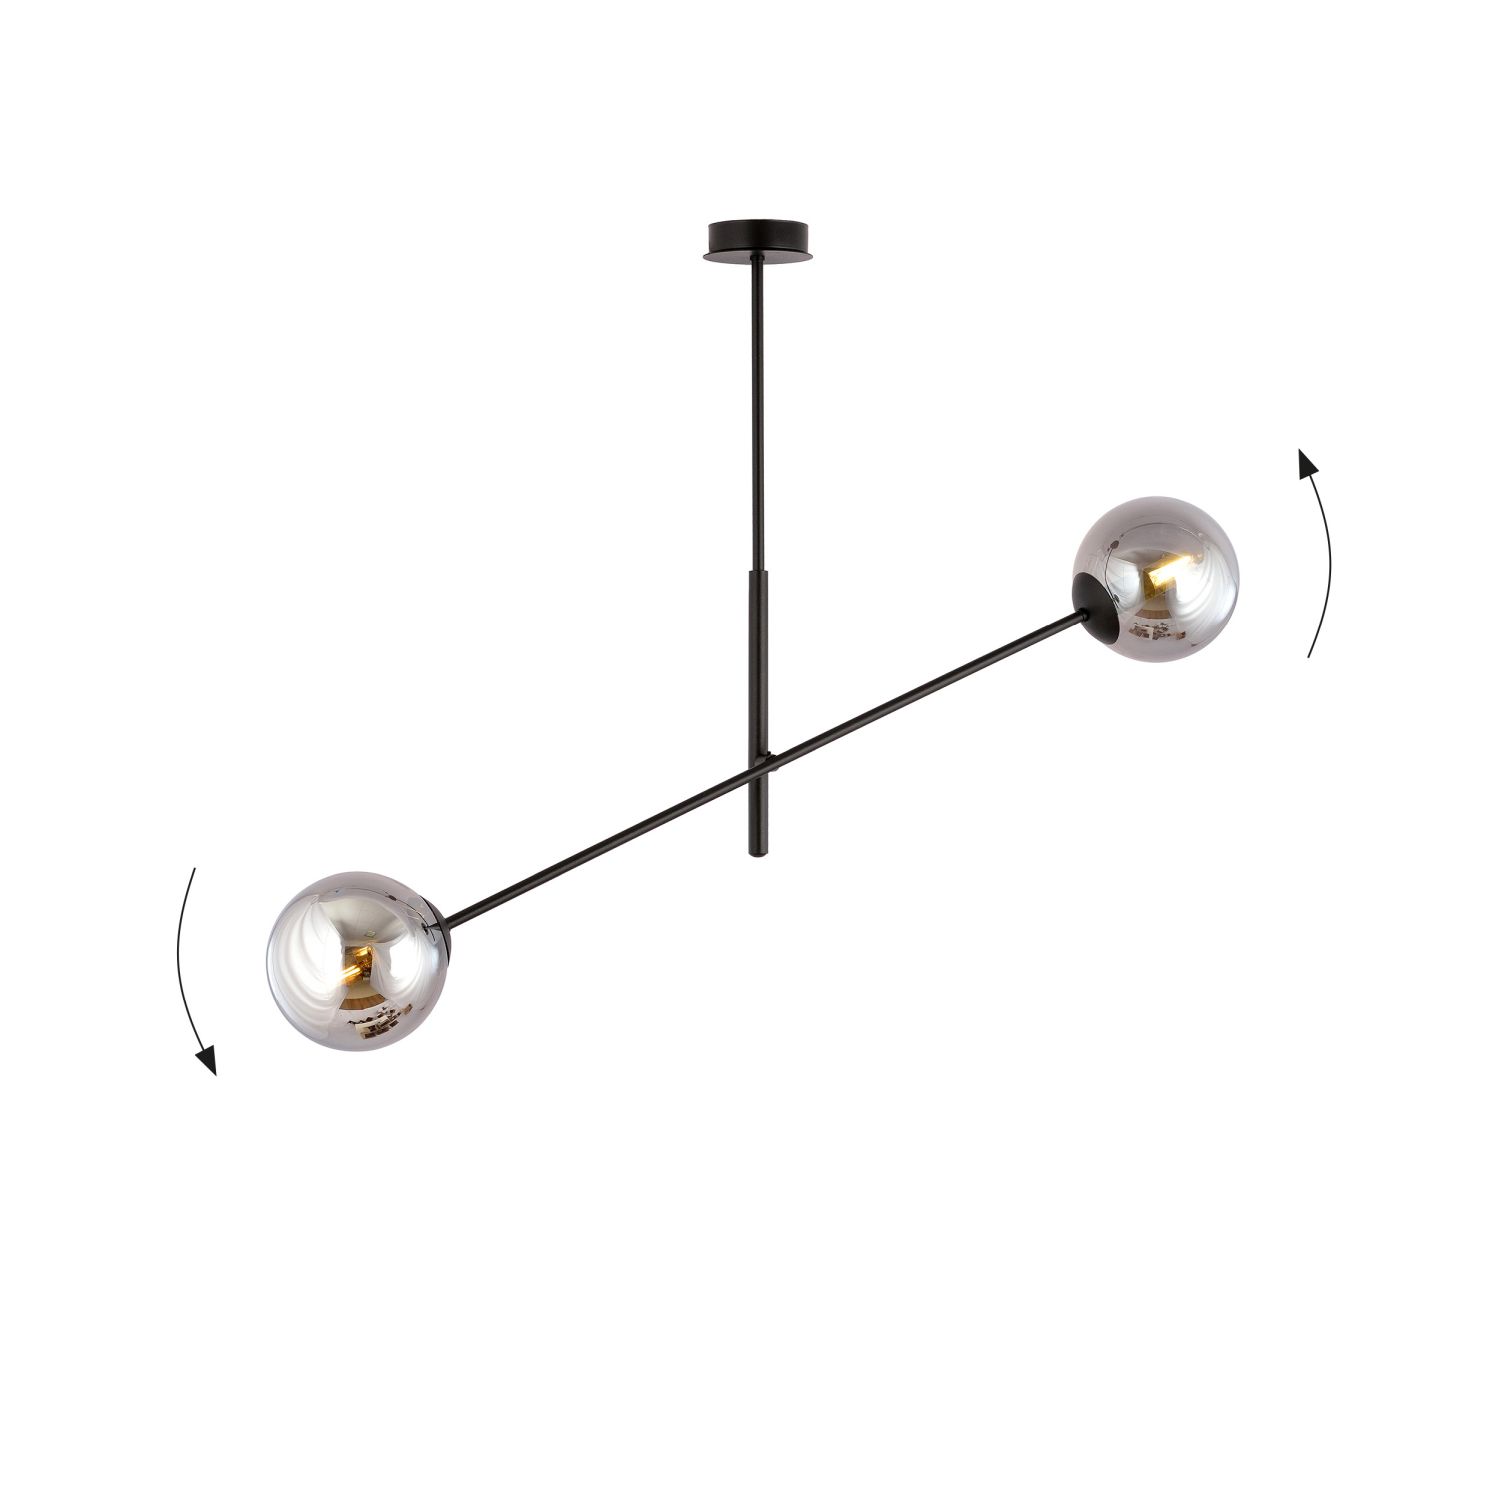 Deckenlampe Rauchglas Metall L: 102 cm schwenkbar 2x E14